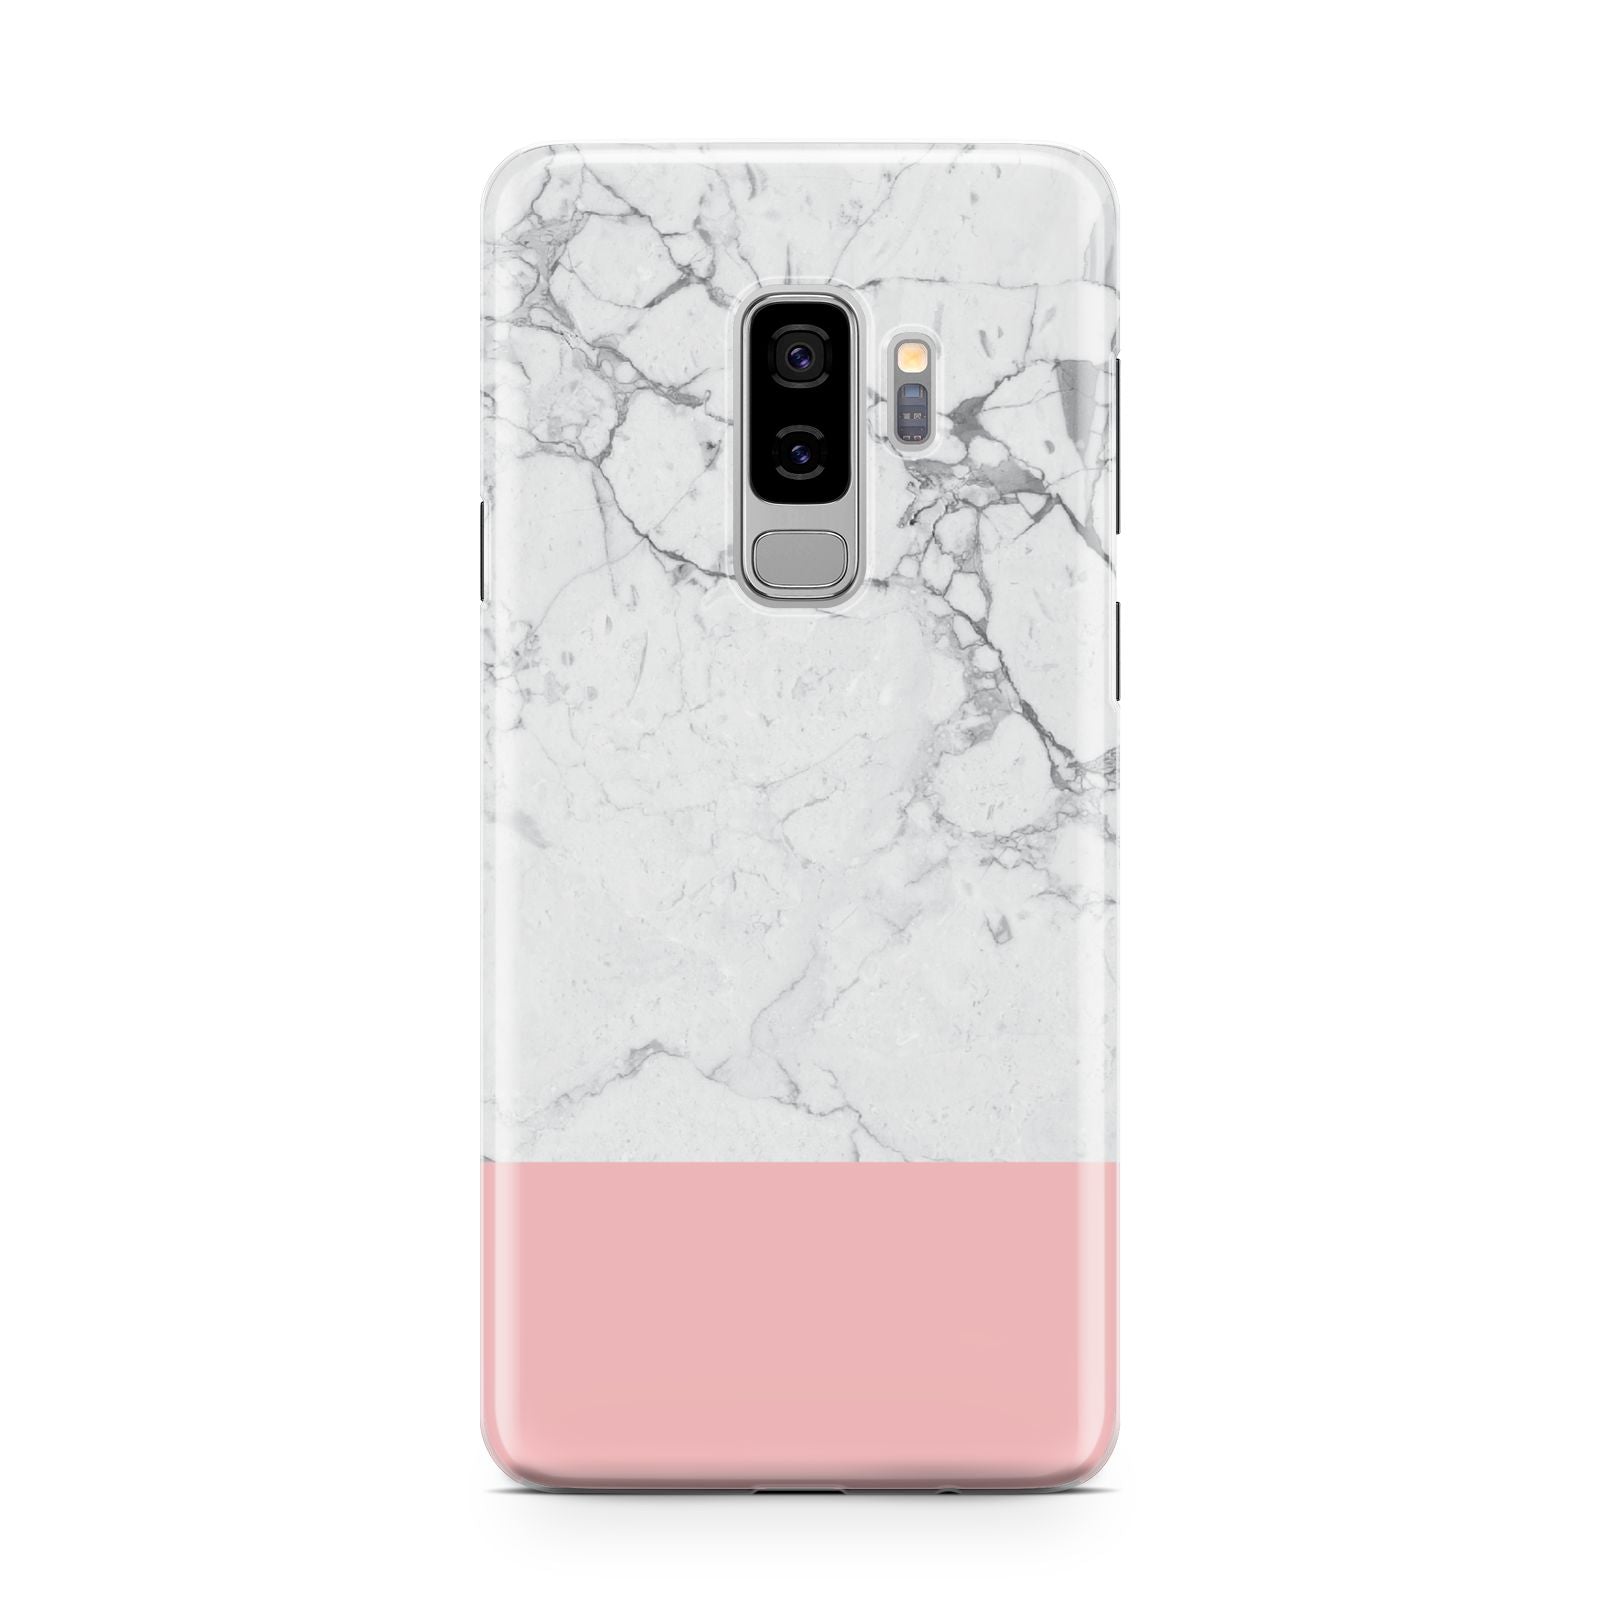 Marble White Carrara Pink Samsung Galaxy S9 Plus Case on Silver phone